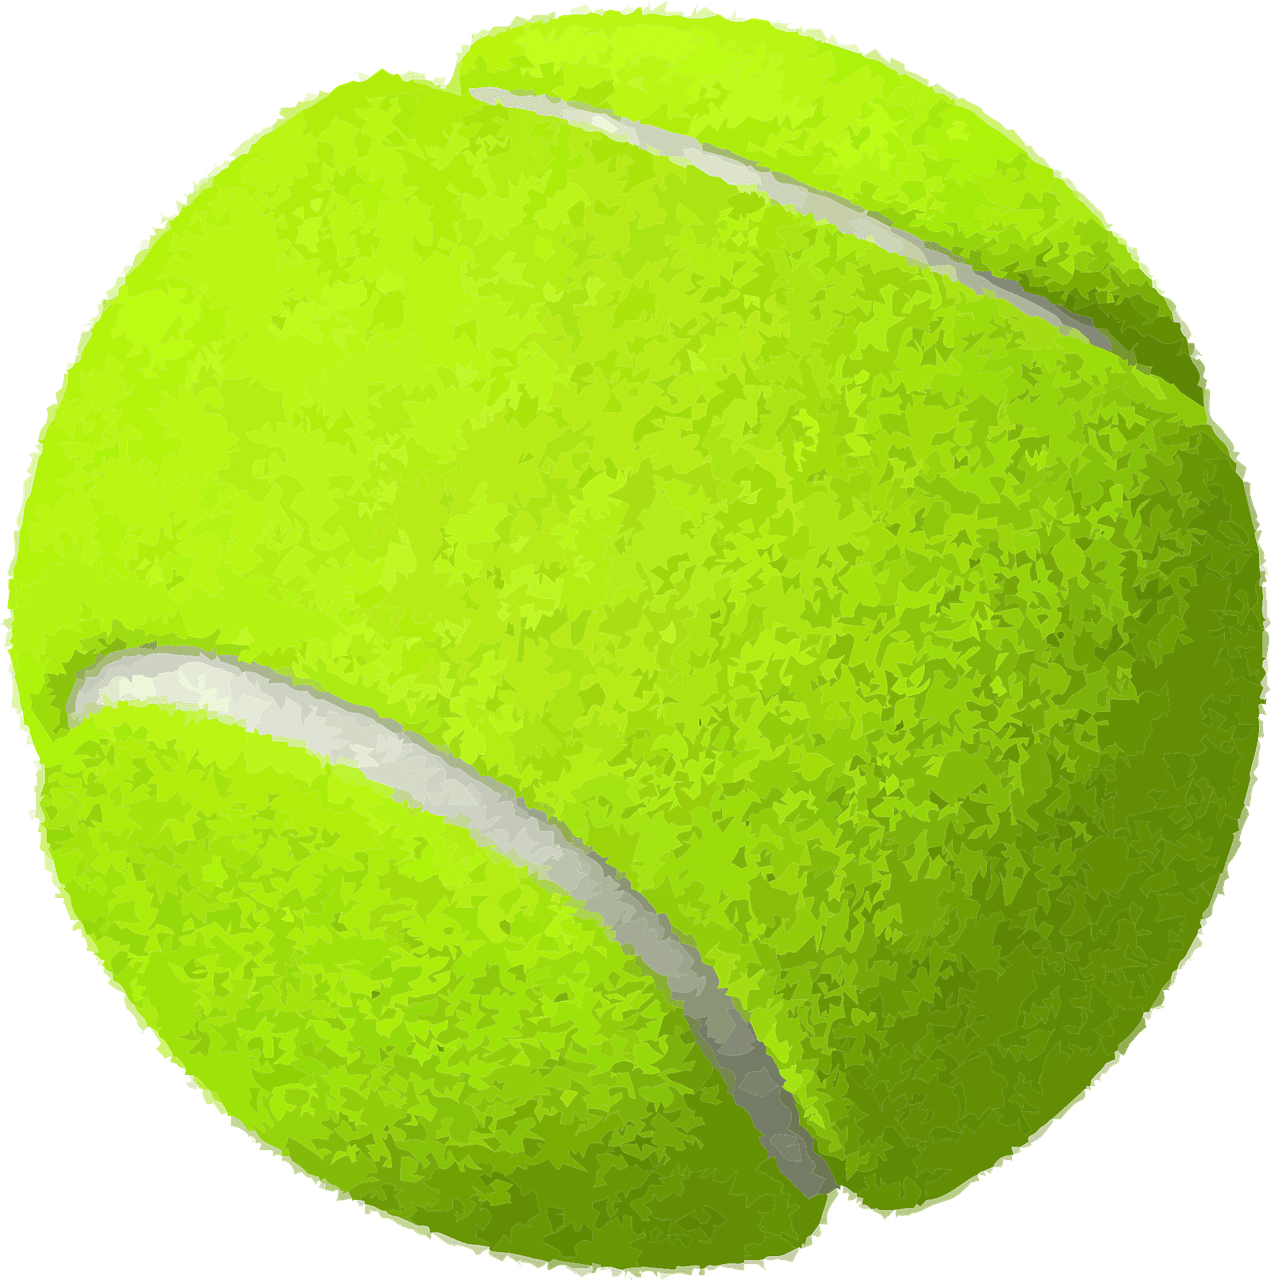 A tennis ball.